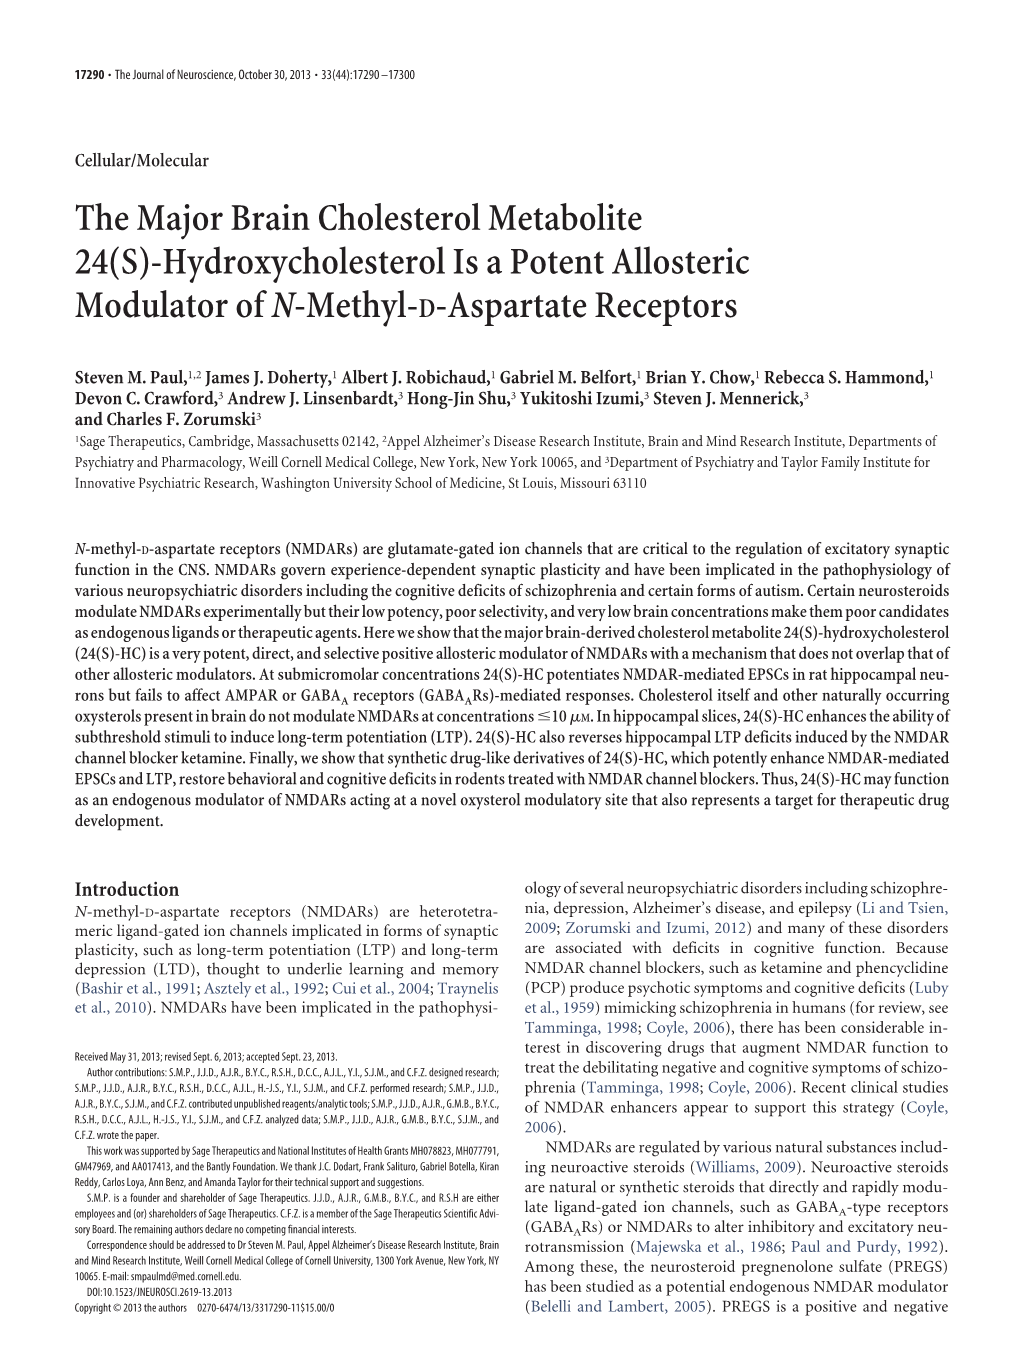 The Major Brain Cholesterol Metabolite 24(S)-Hydroxycholesterol Is a Potent Allosteric Modulator Ofn-Methyl-D-Aspartate Receptor